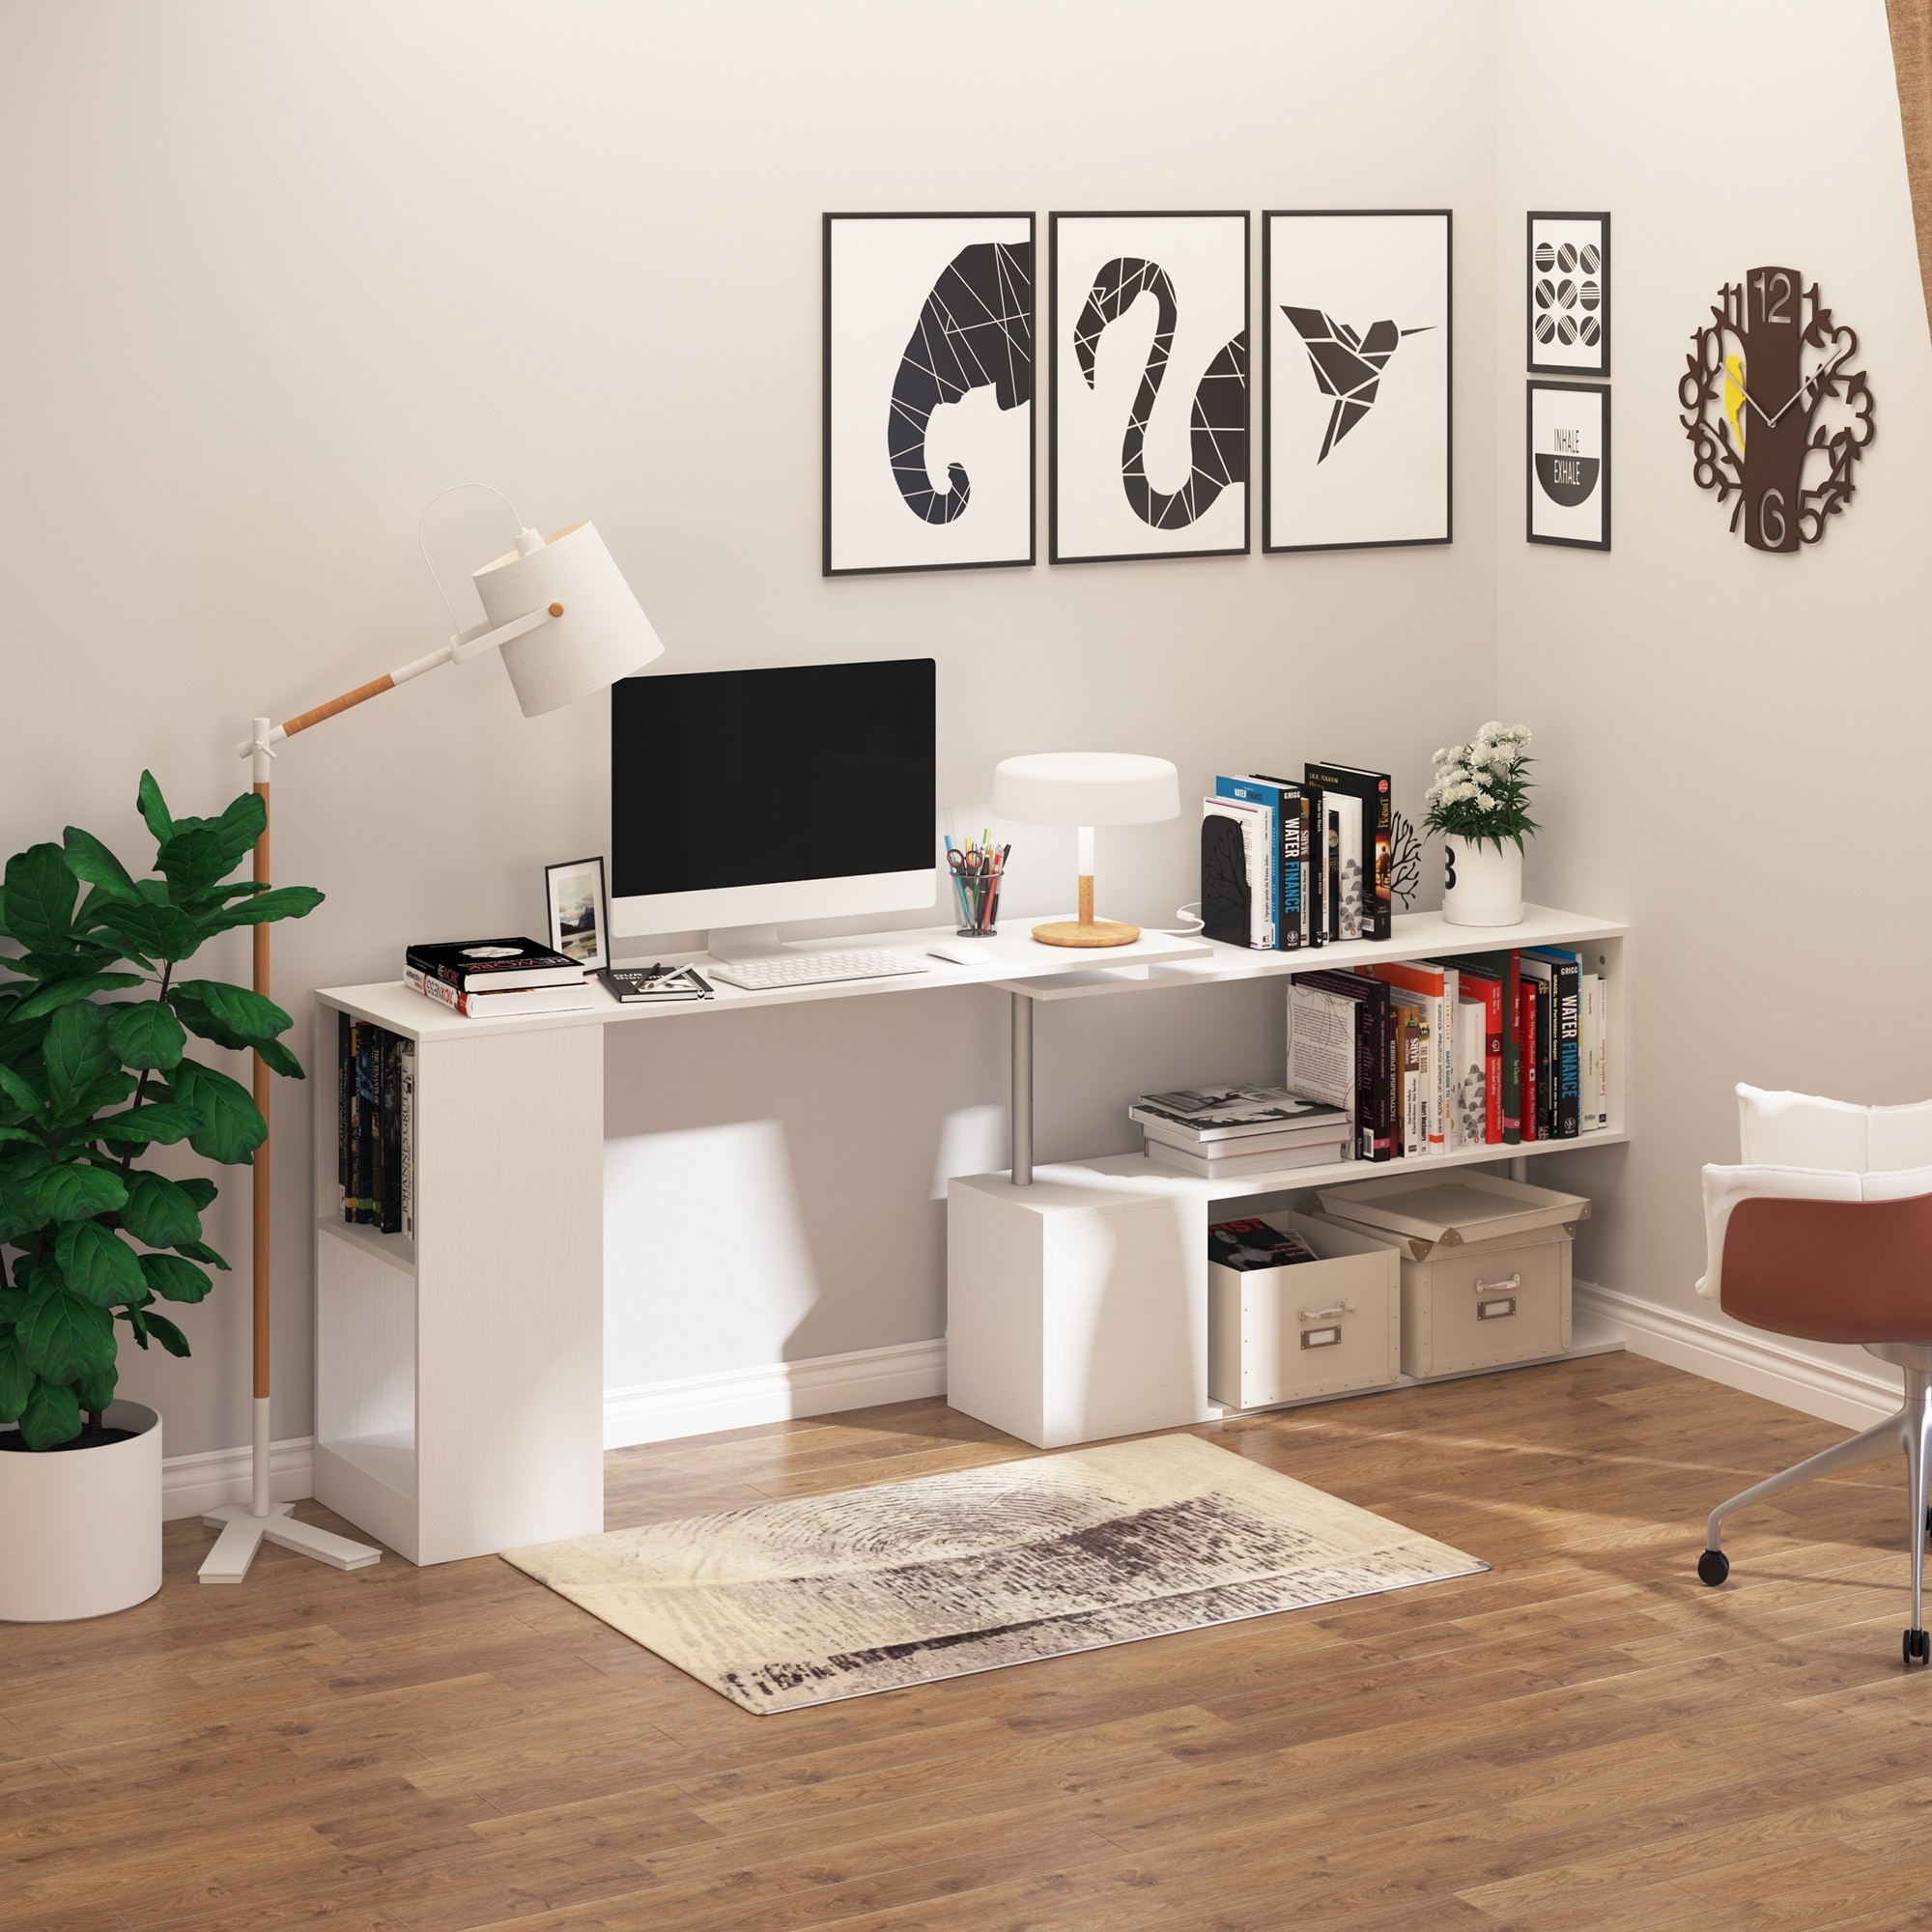 Homcom Home Office Desk, Computer Desk For Small Spaces, Writing